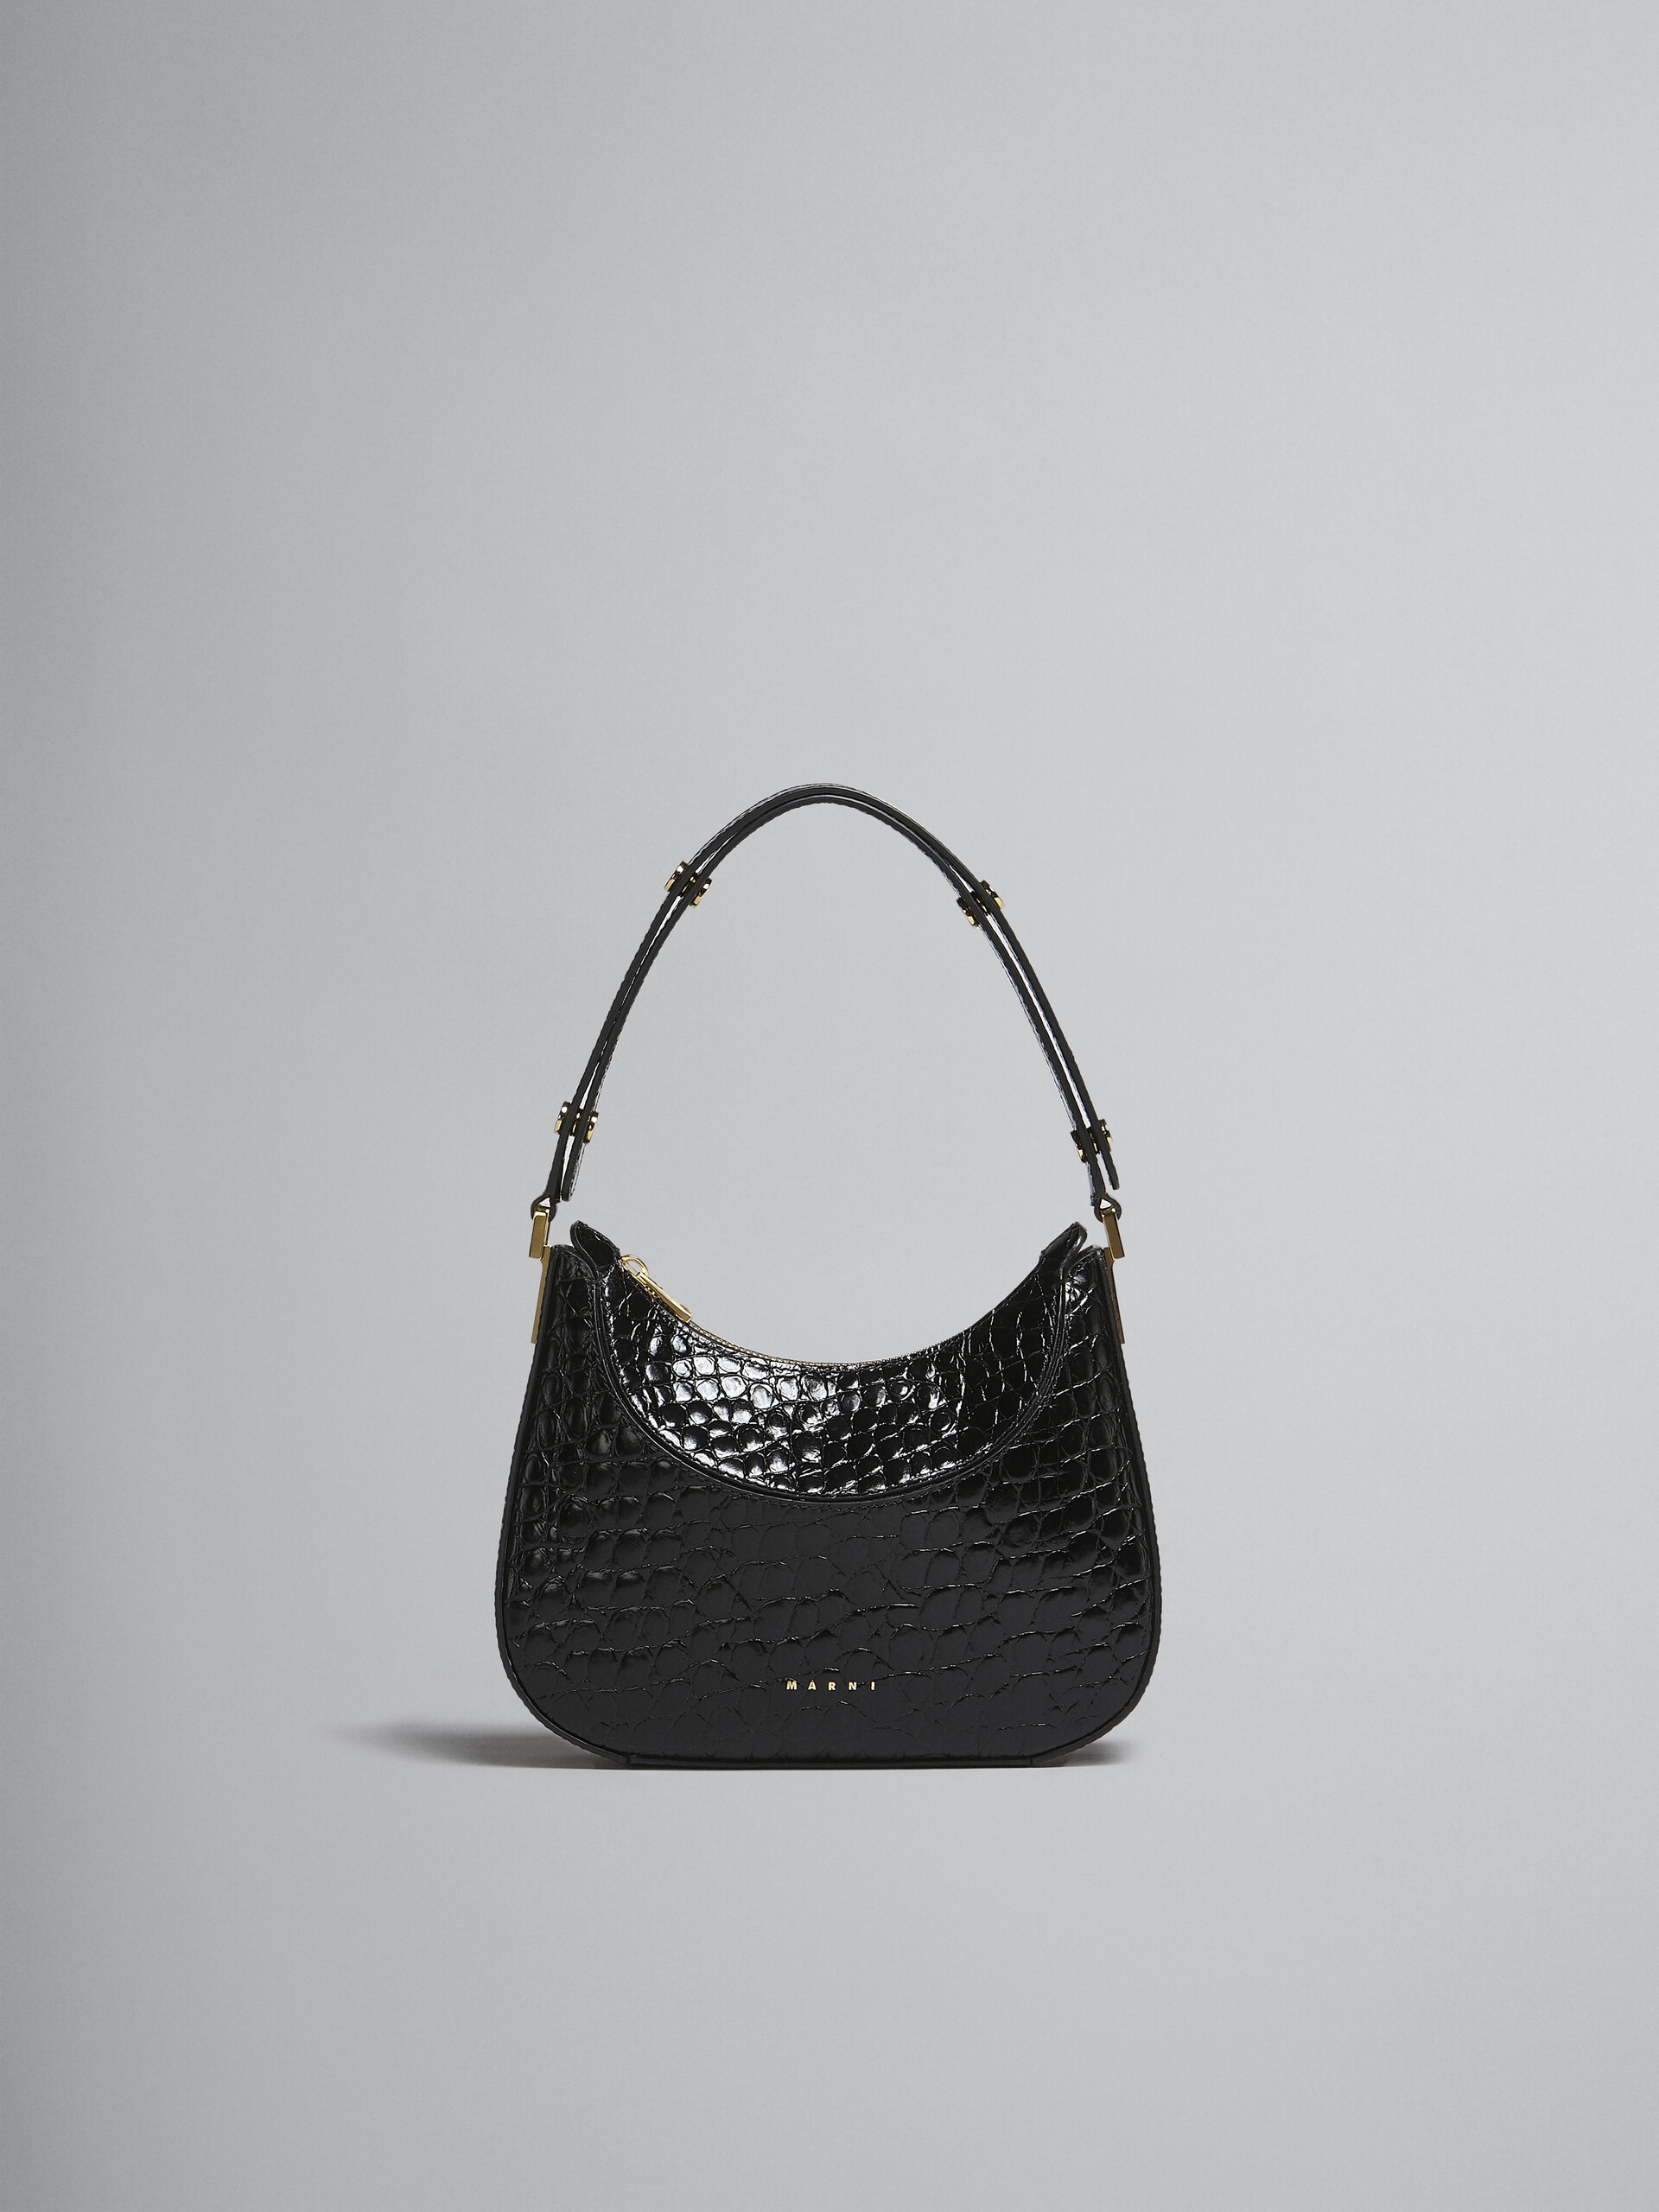 Milano Mini Bag in black croco print leather - Handbag - Image 1